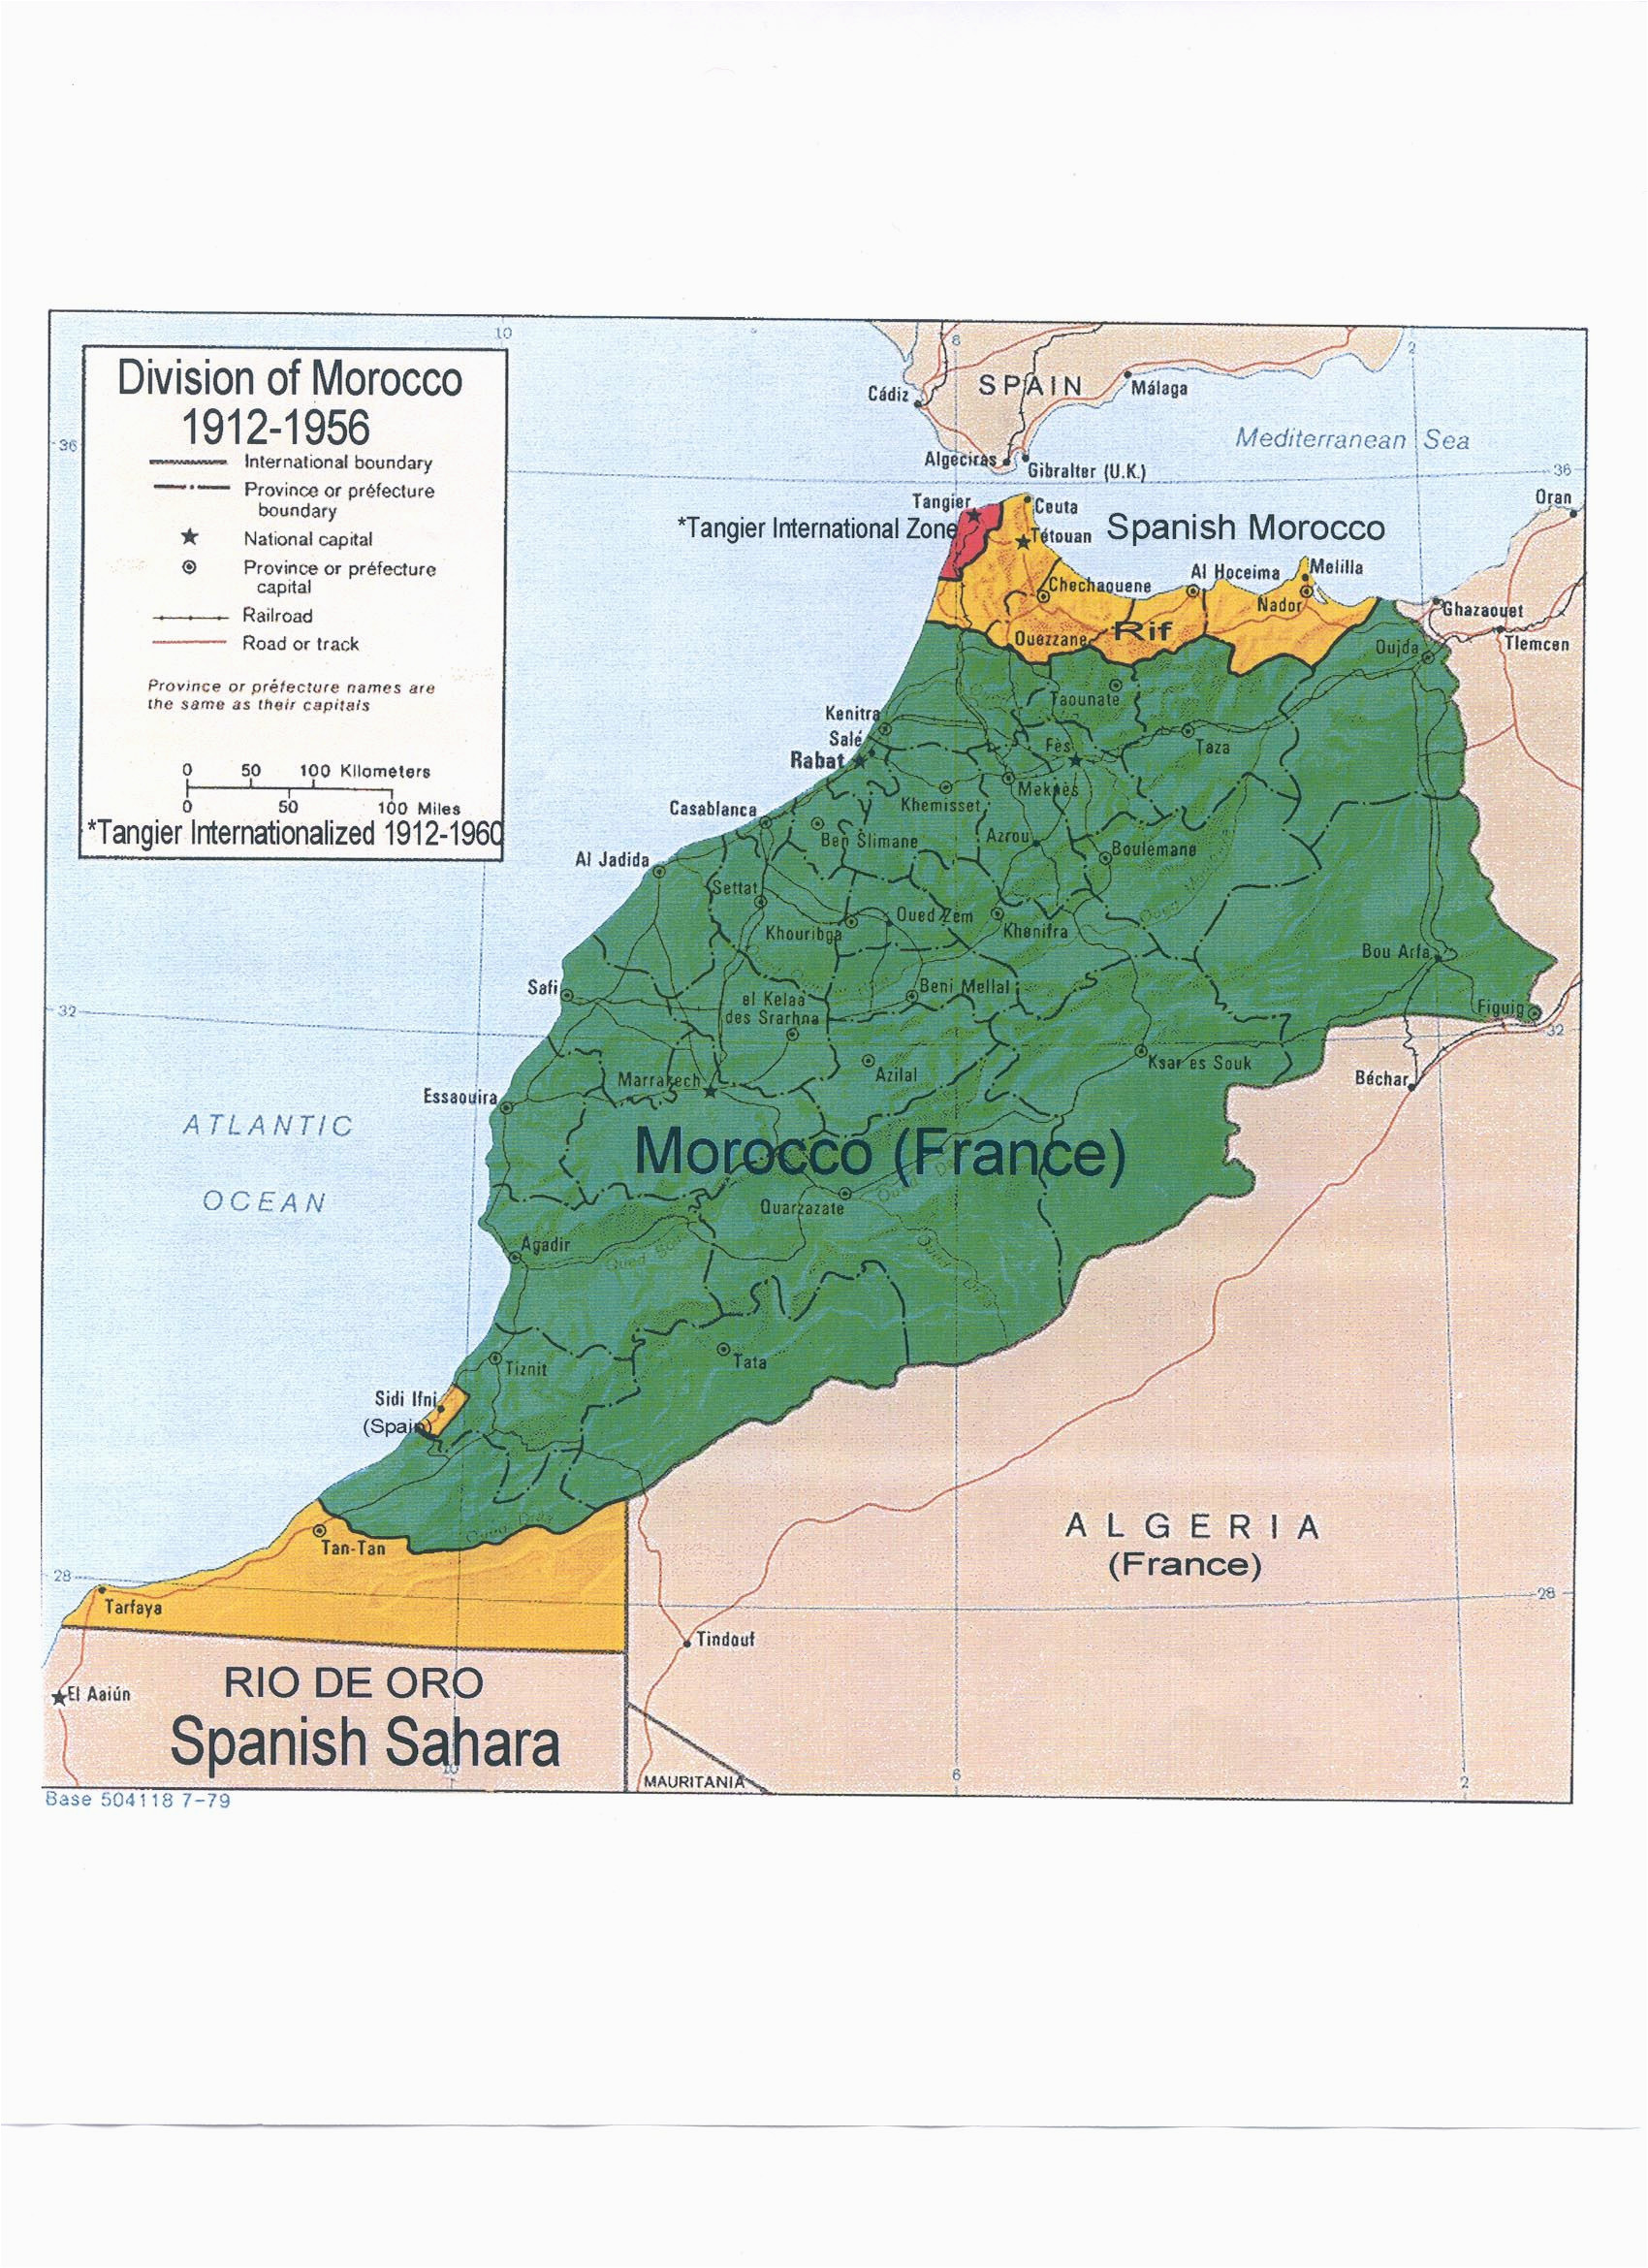 Map Of Macedonia Ohio Map Colonial Morocco Map Geopolitique A Poque Contemporaine